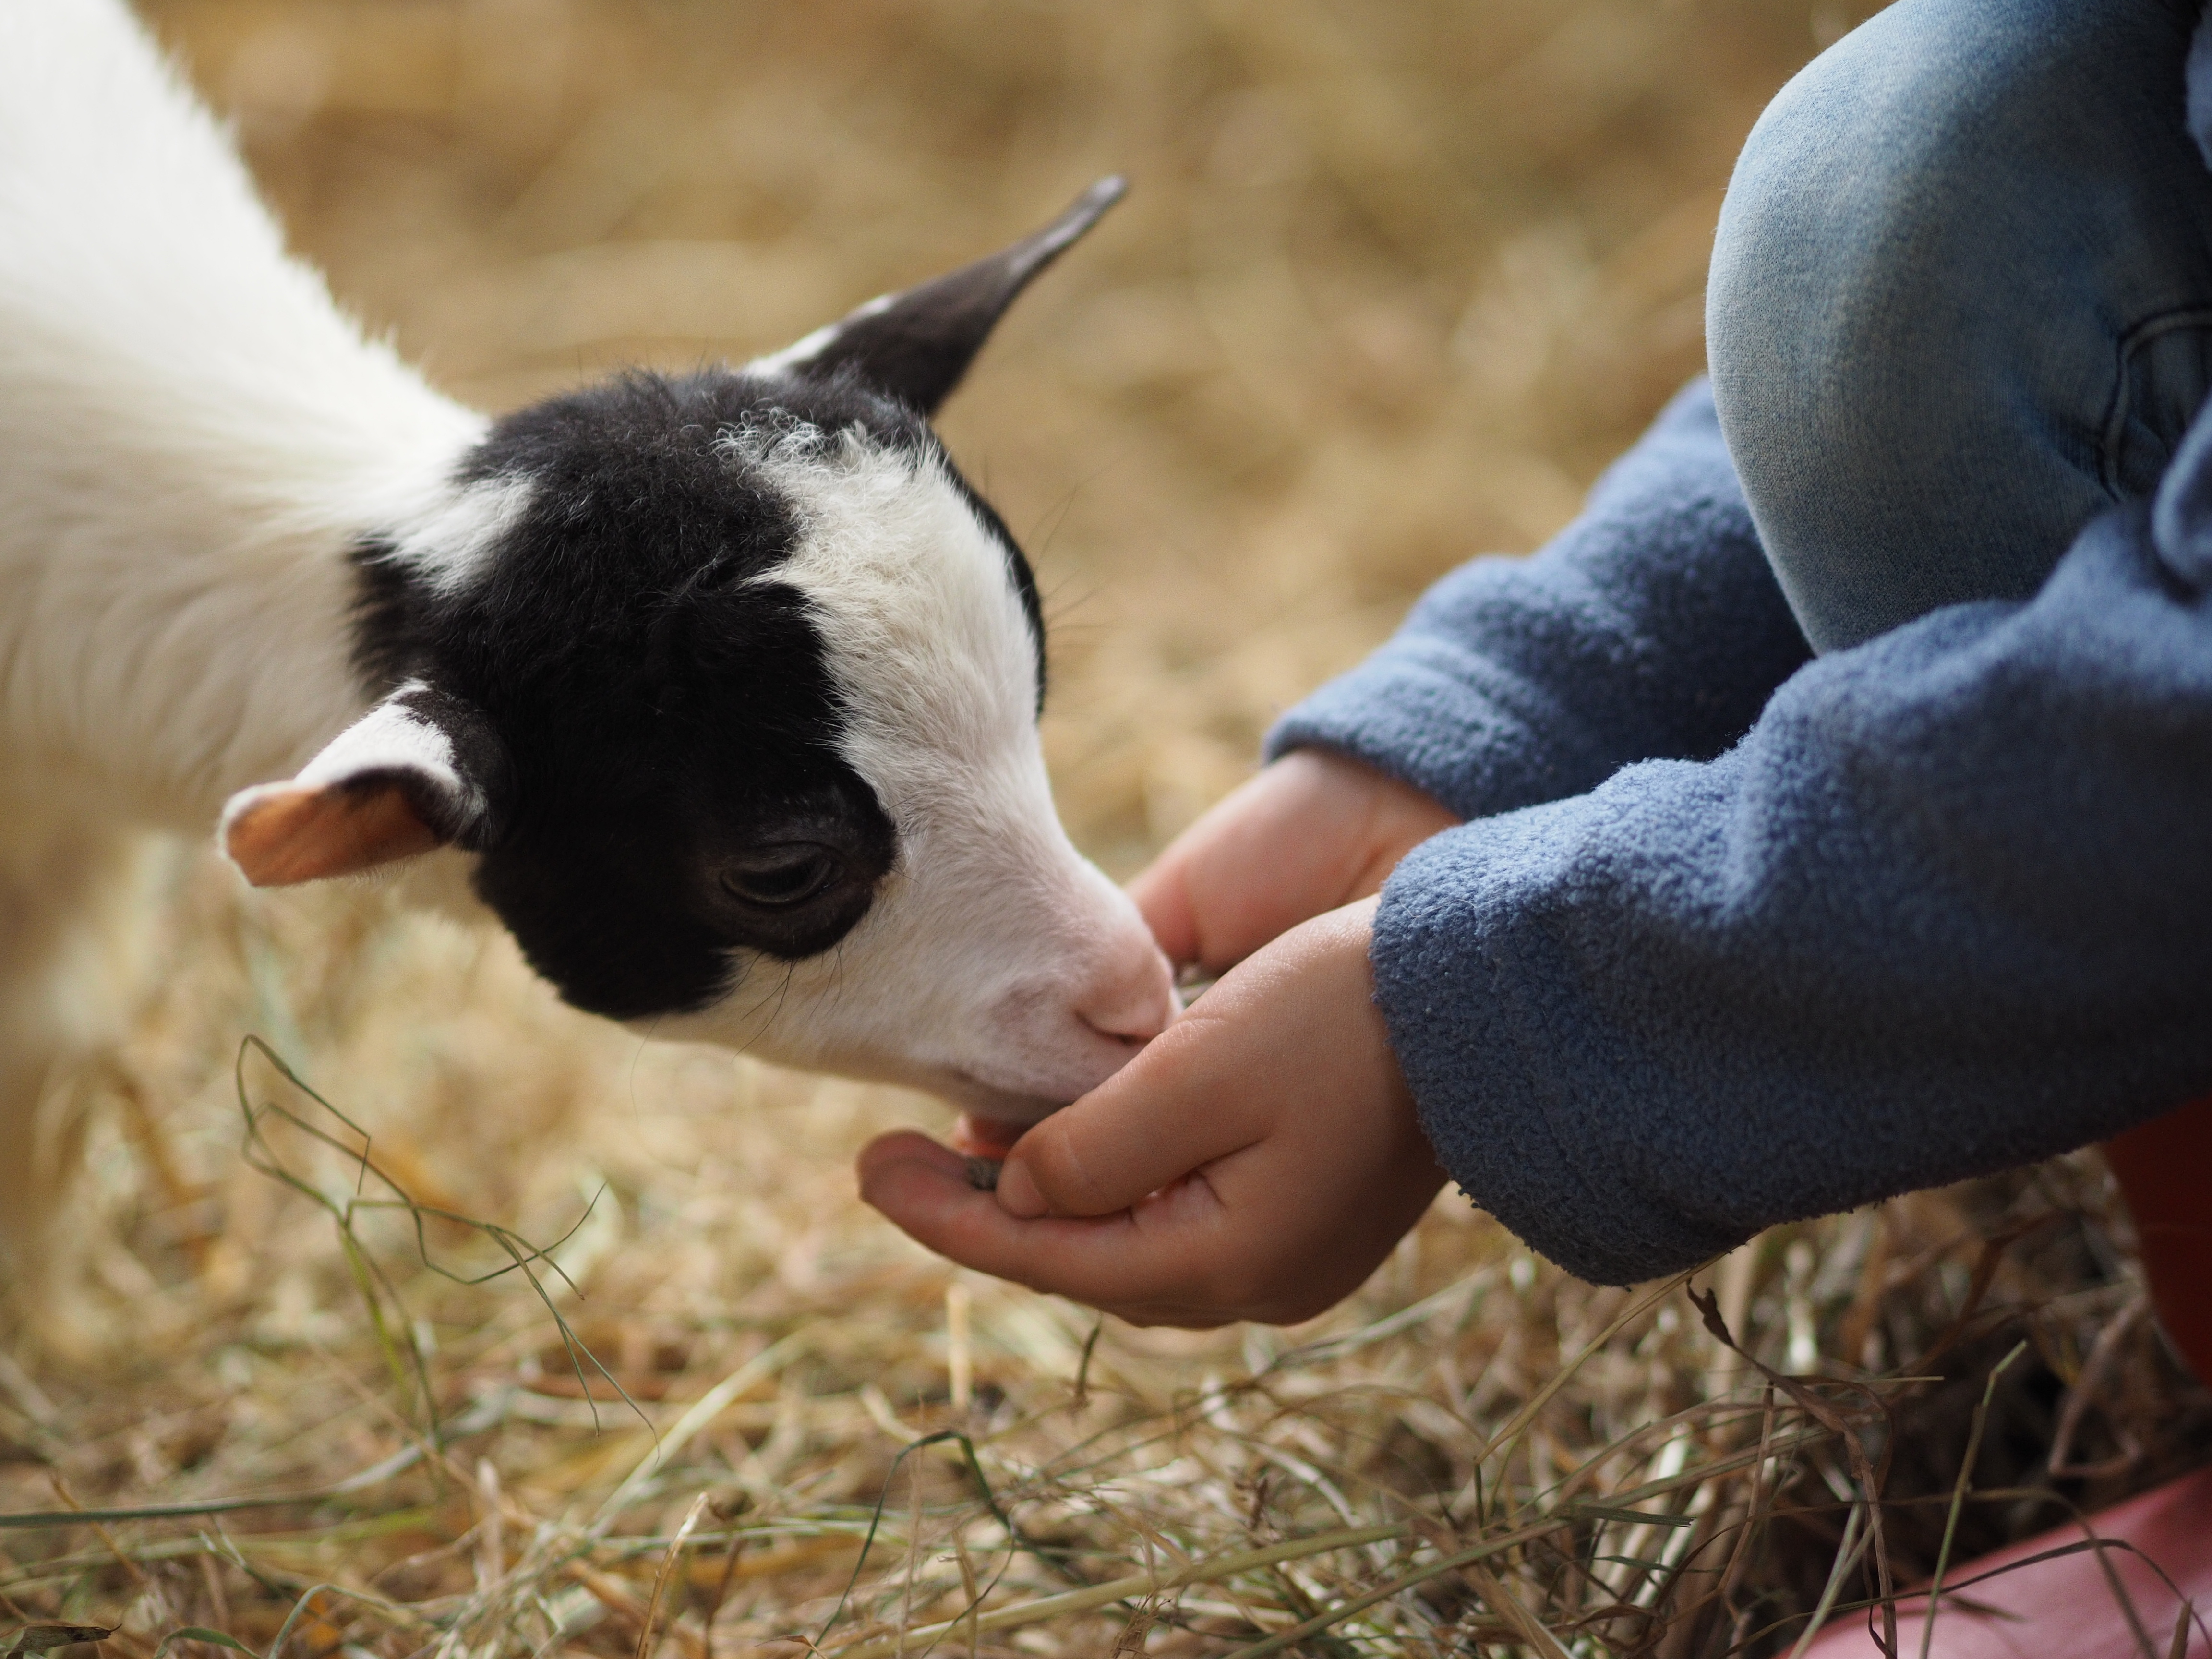 Child feeding a goat